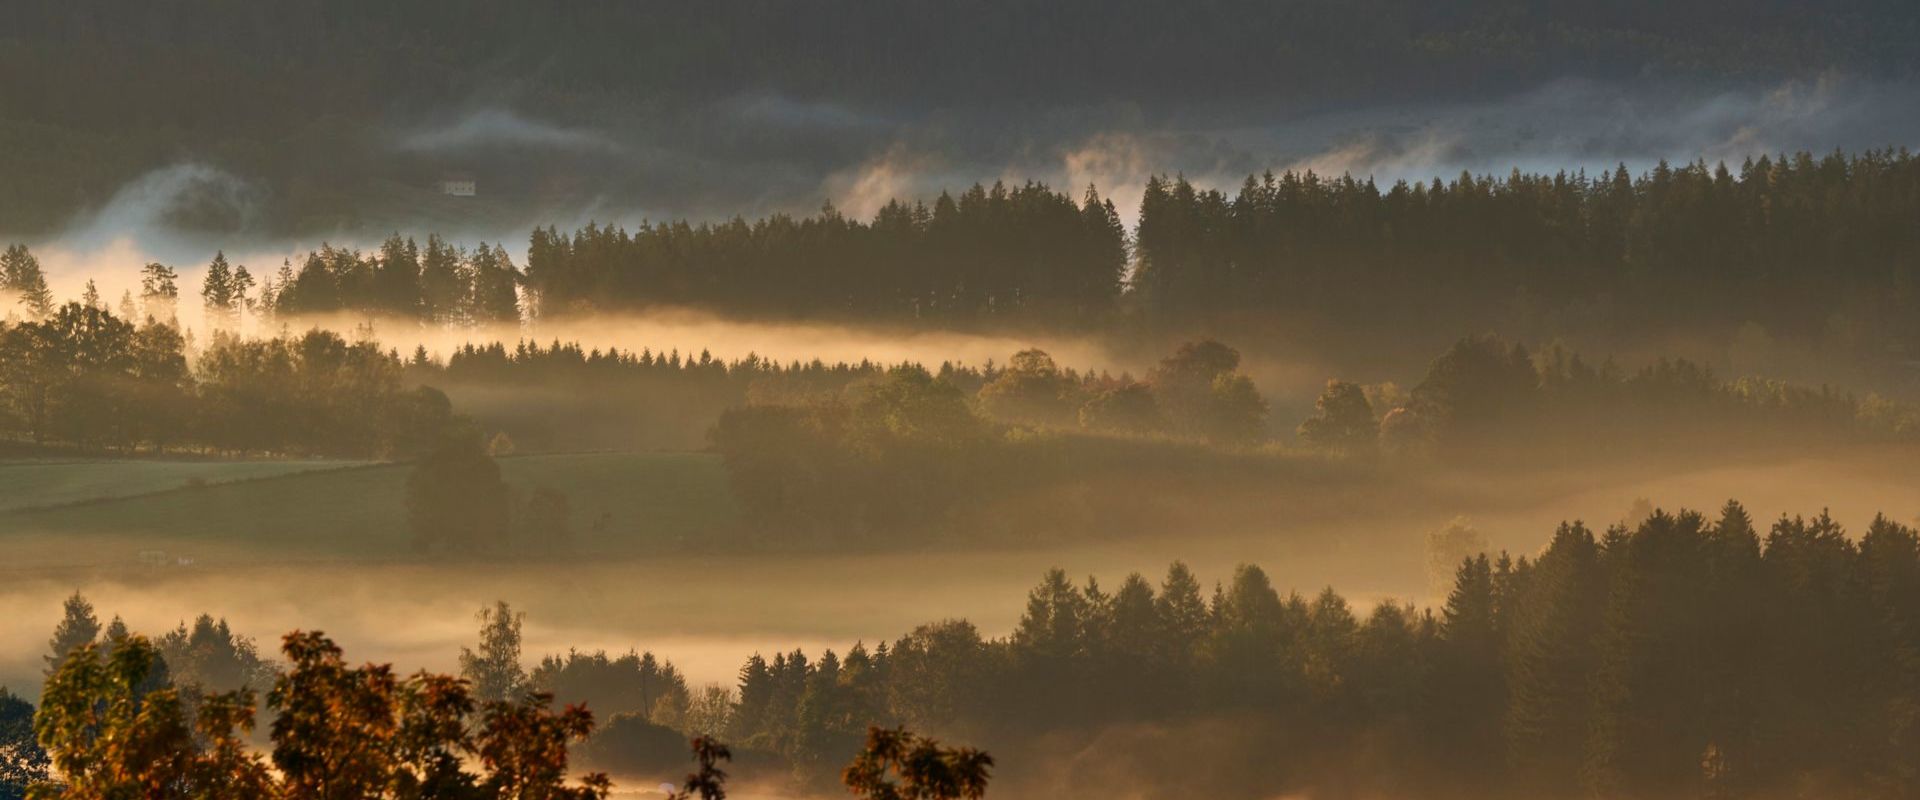 Nebelschwaden im Bayerischen Wald. Bildautor Woidlife Photography